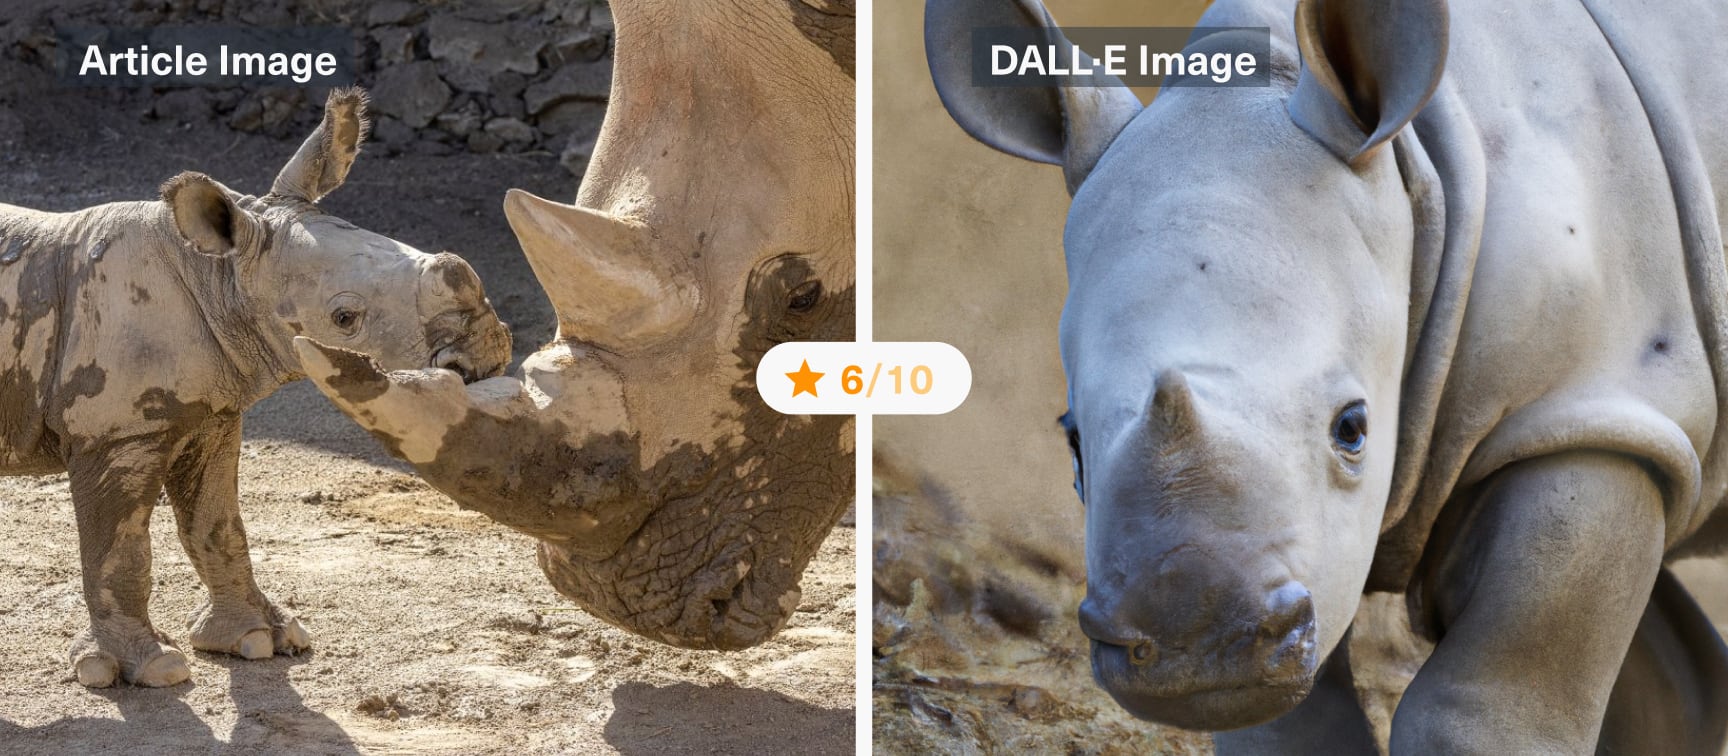 DALL-E meets News API: News Headline: “San Diego Zoo welcomes birth of adorable white rhino calf”